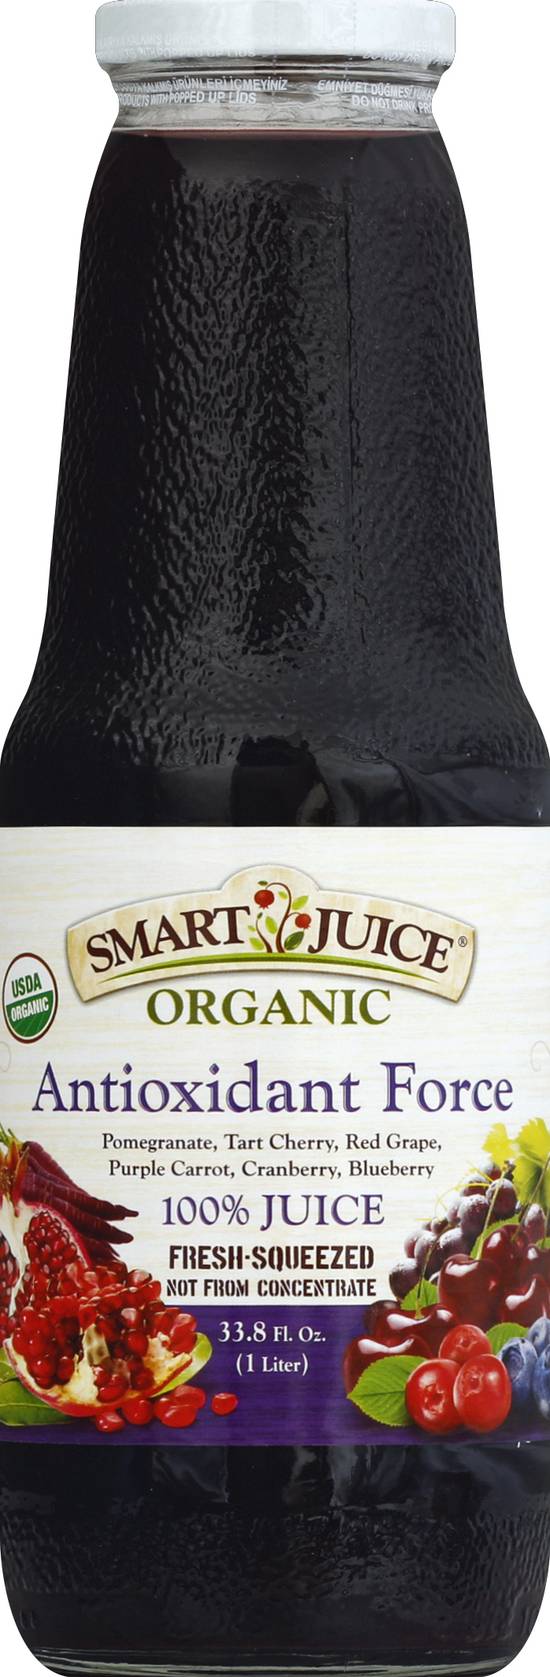 Smart Juice Organic Antioxidant Force Juice (33.8 fl oz)